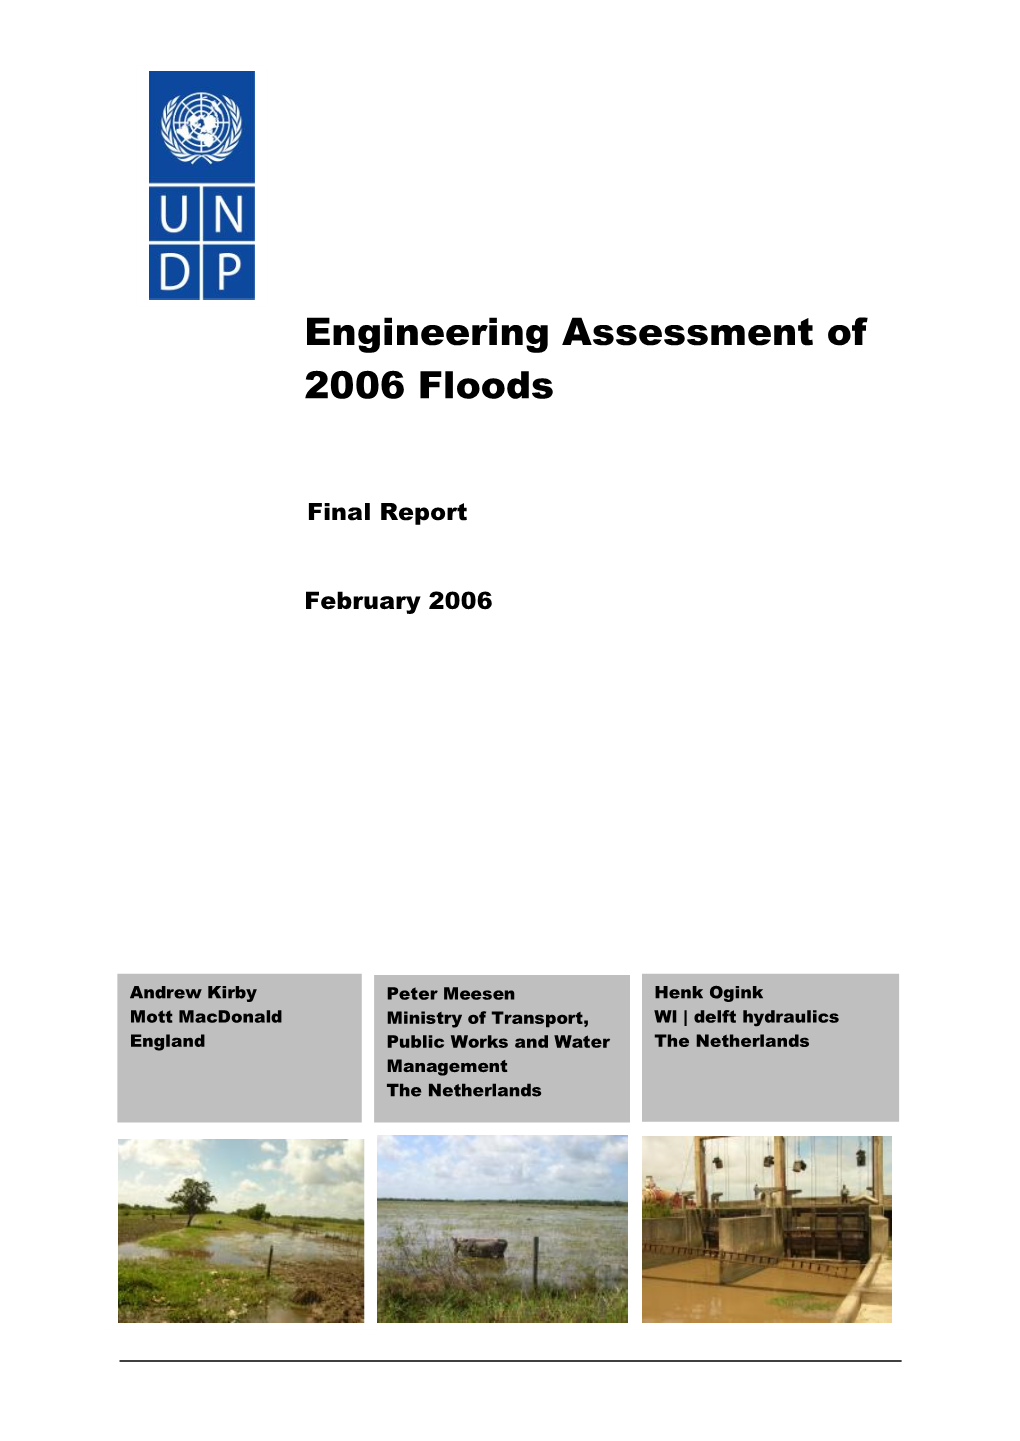 Engineering Assessment of 2006 Floods